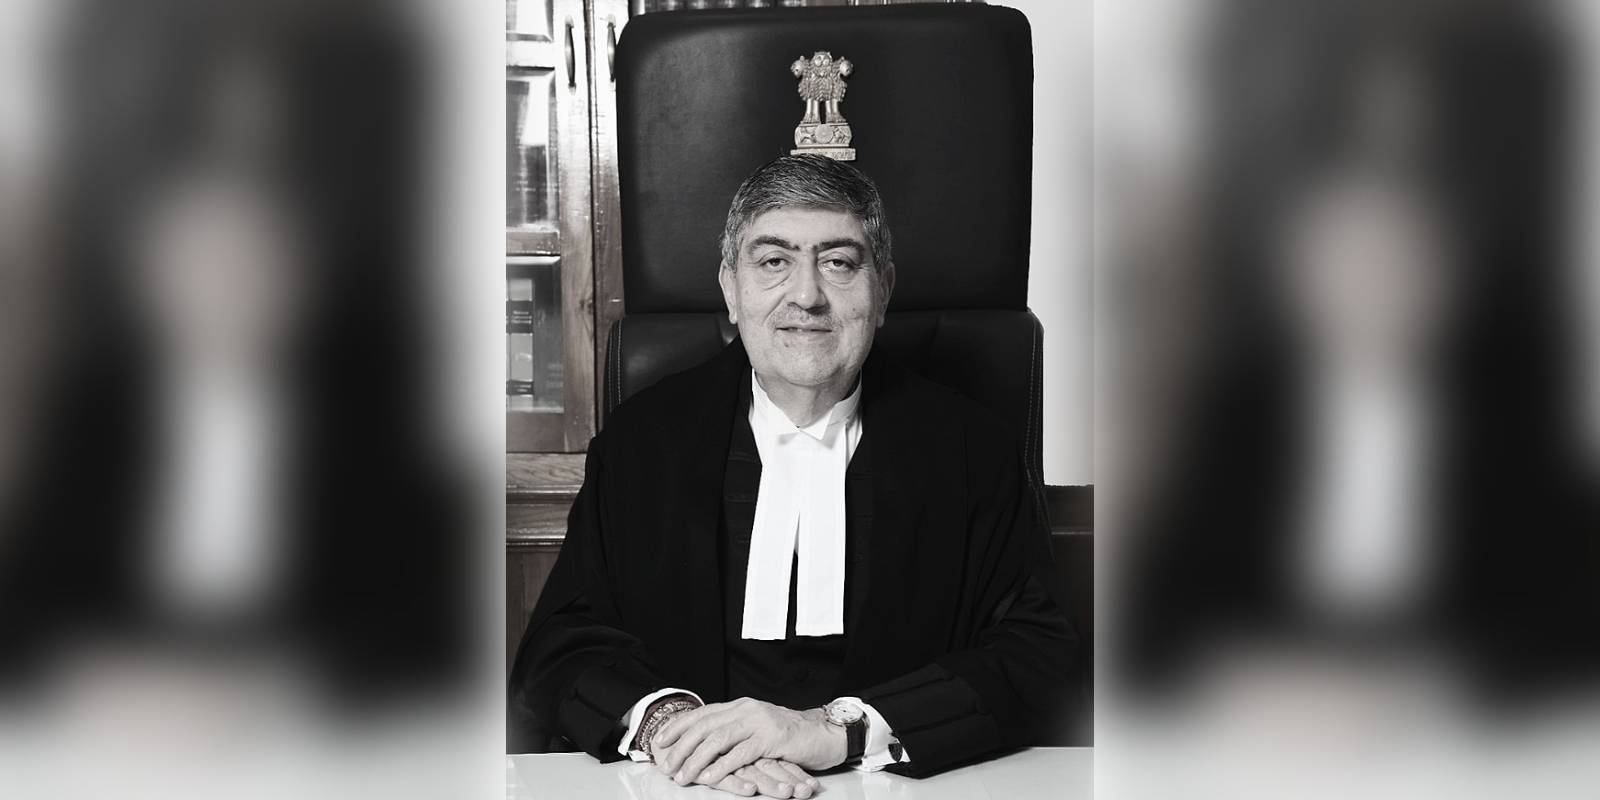 Justice Kishan Singh Kaul